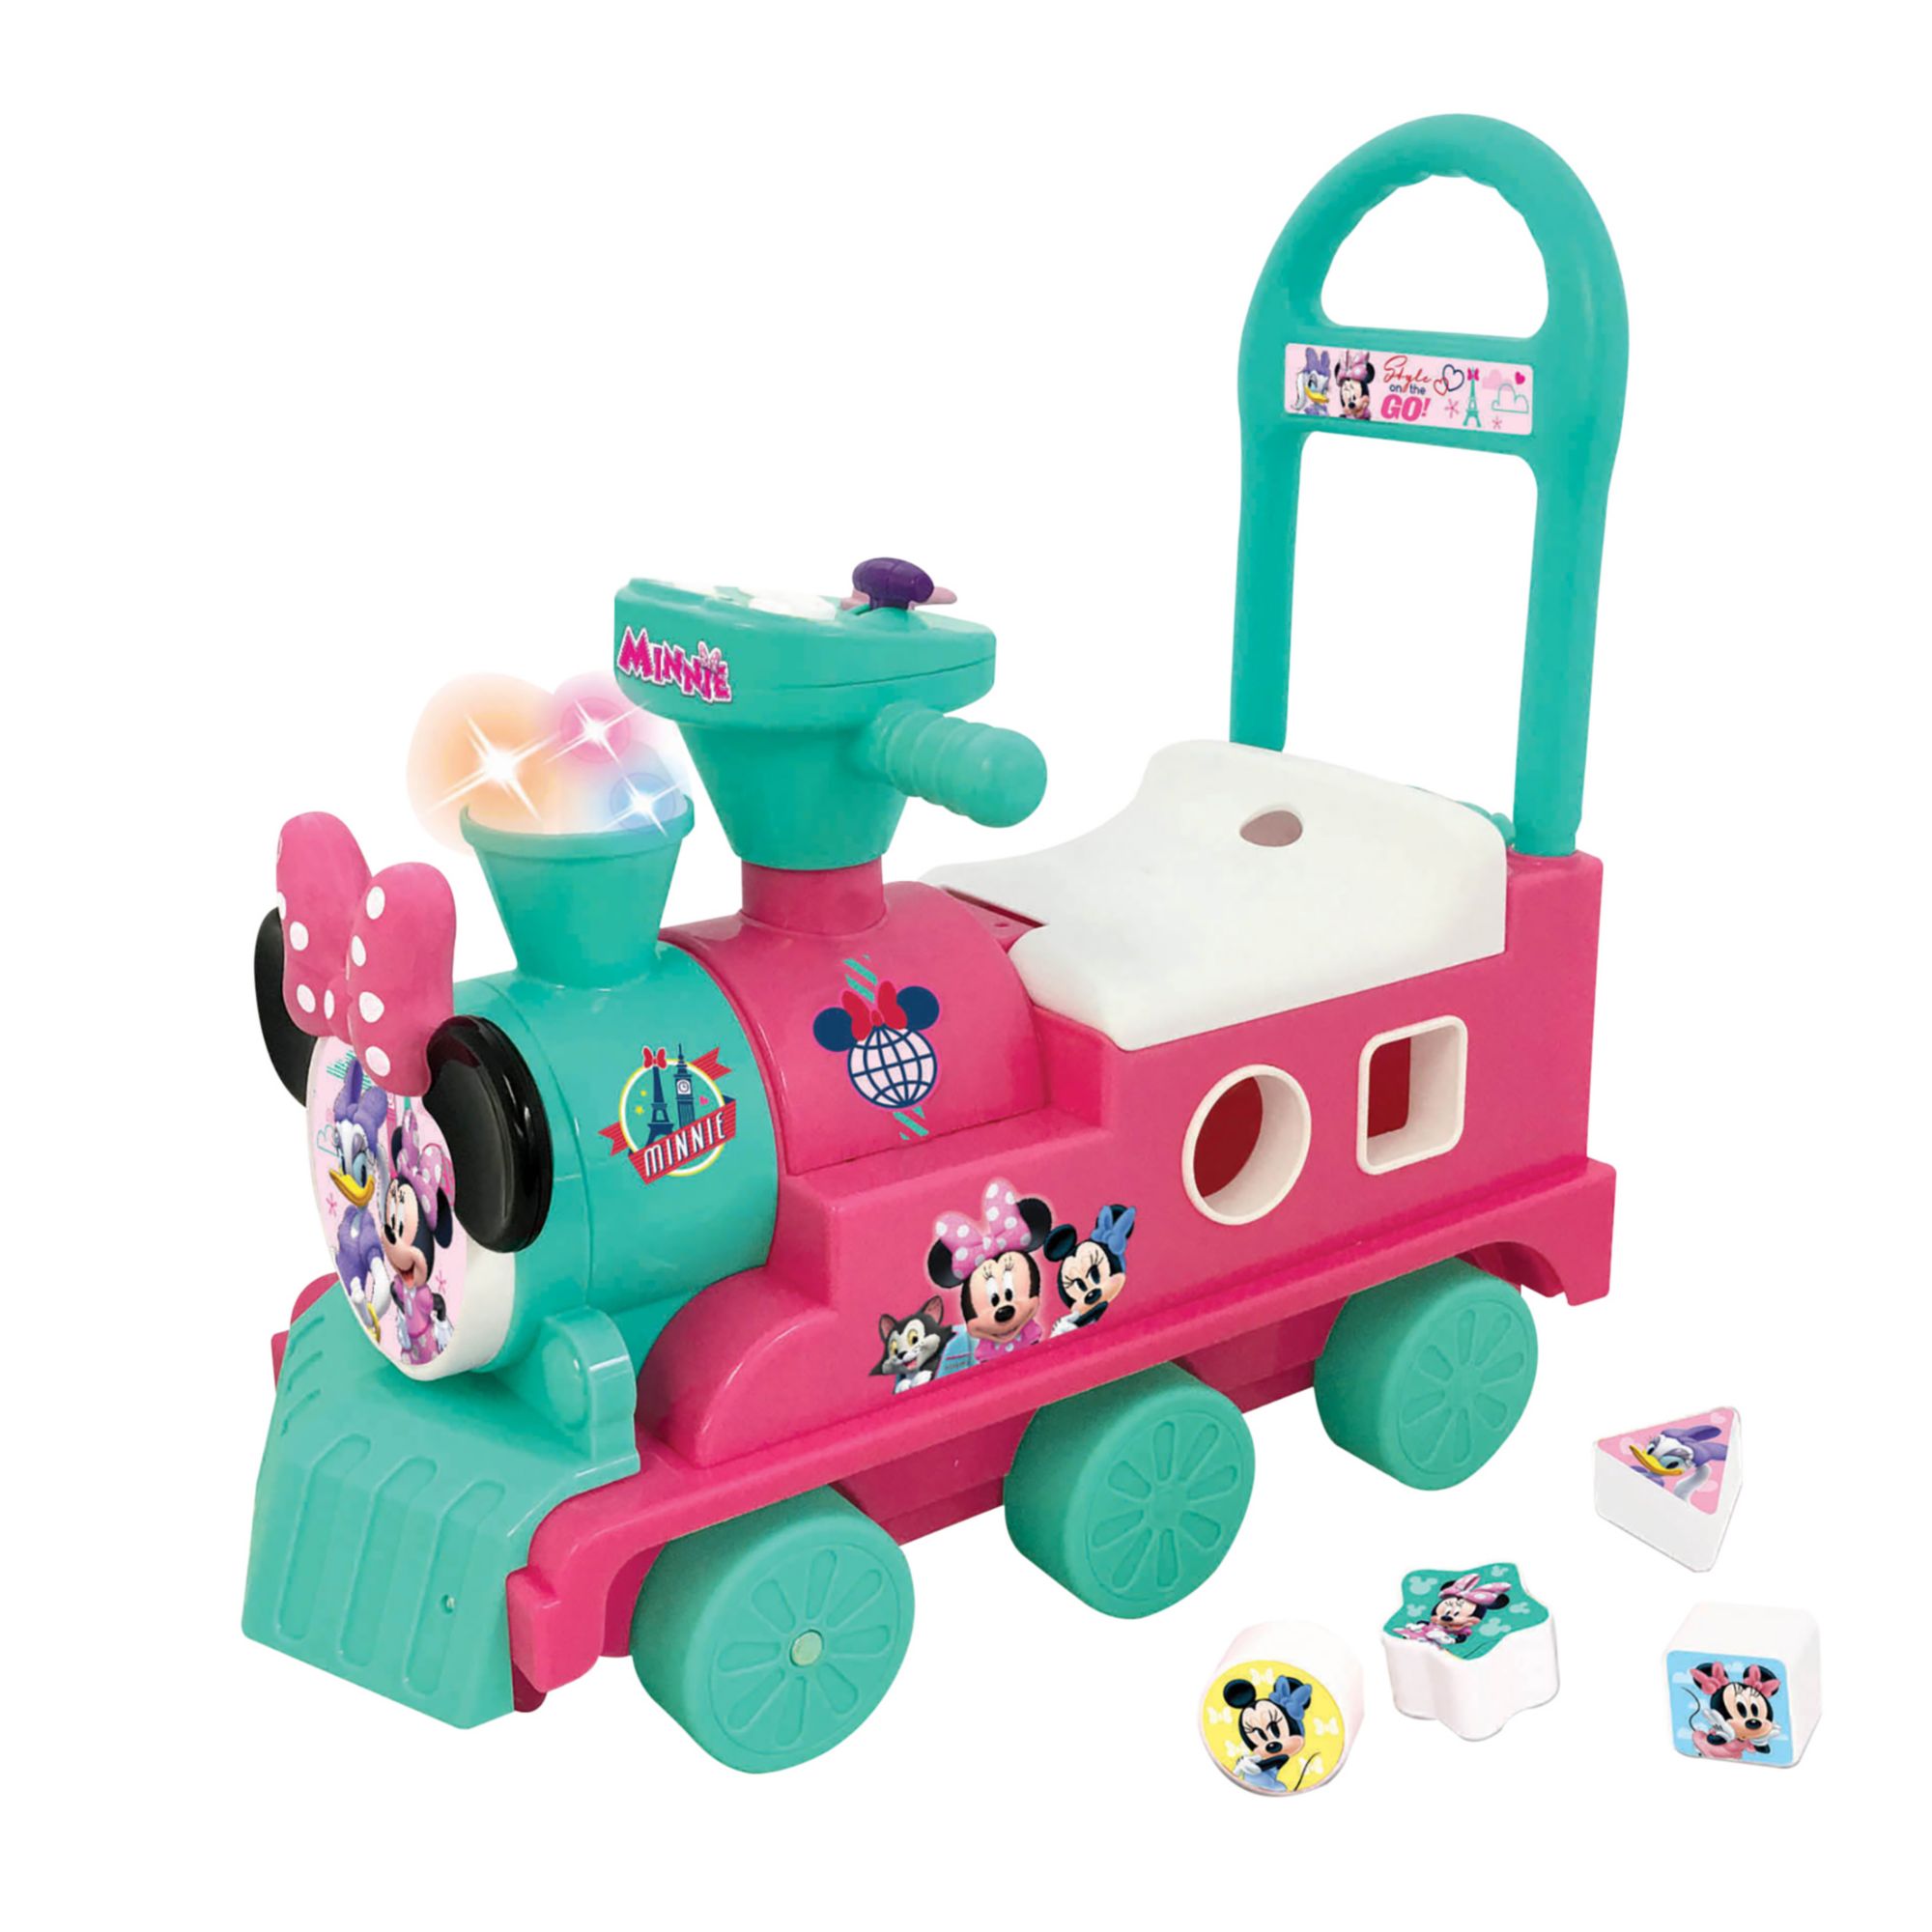 Kiddieland Disney Minnie Mouse Play n' Sort Activity Train Ride-On